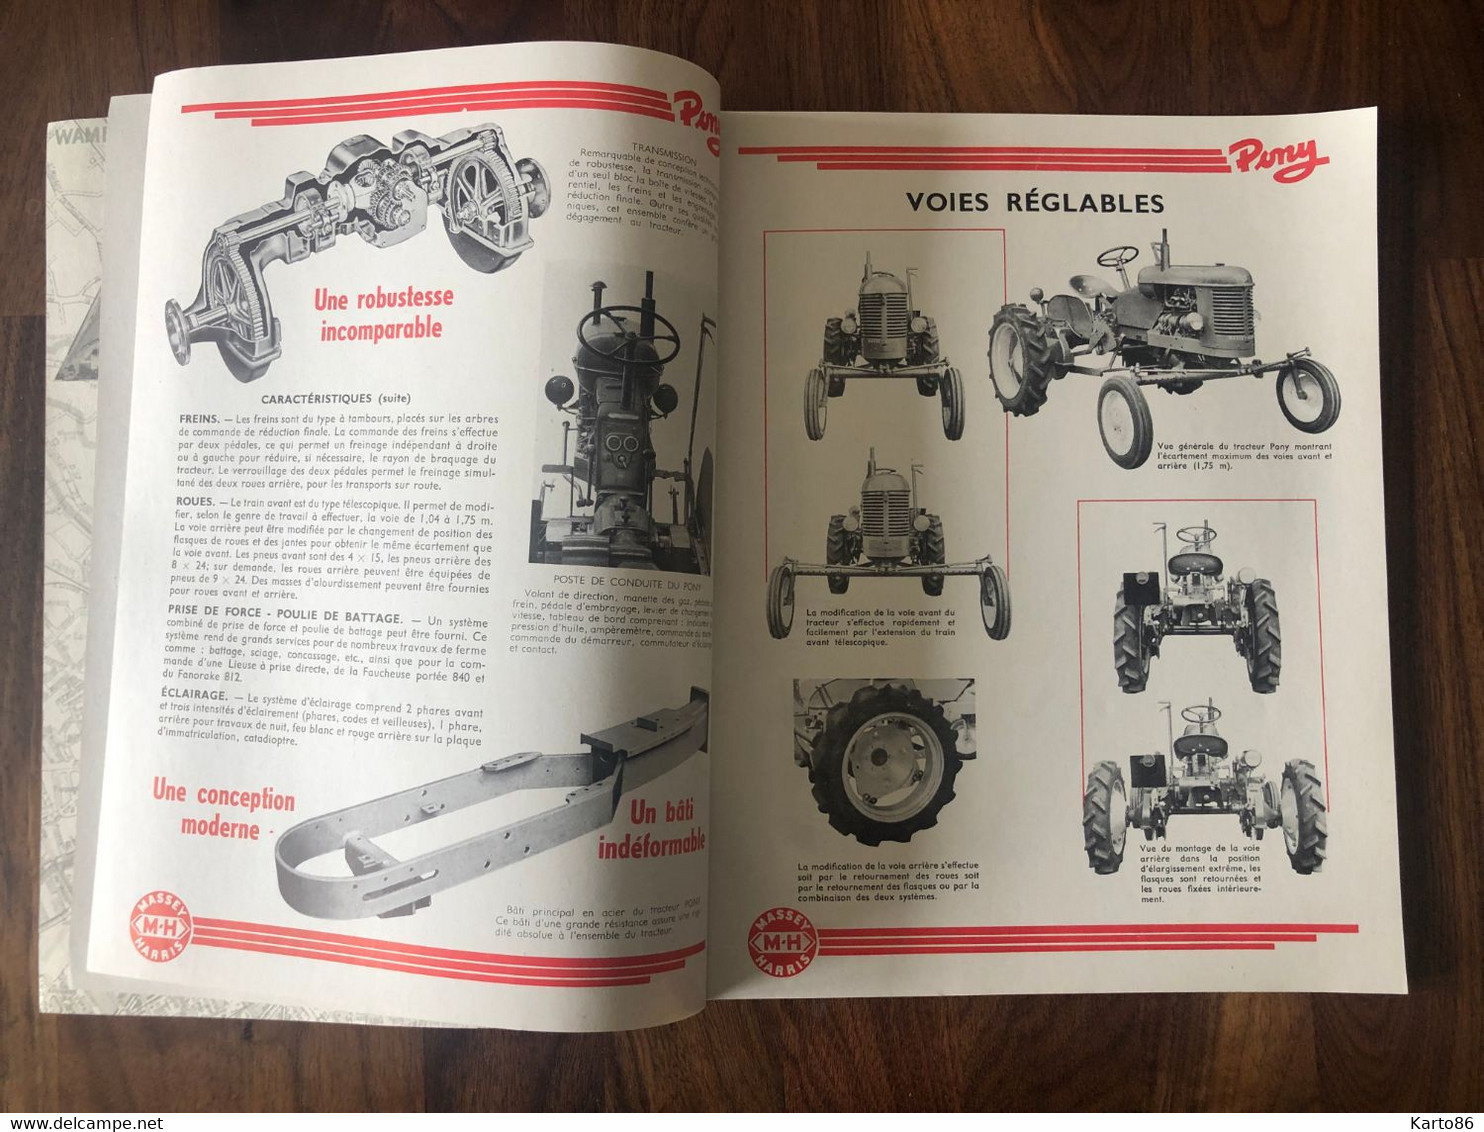 tracteur Pony MASSEY HARRIS 1954  * brochure publicitaire ancienne illustrée * massey harris tractor agriculture